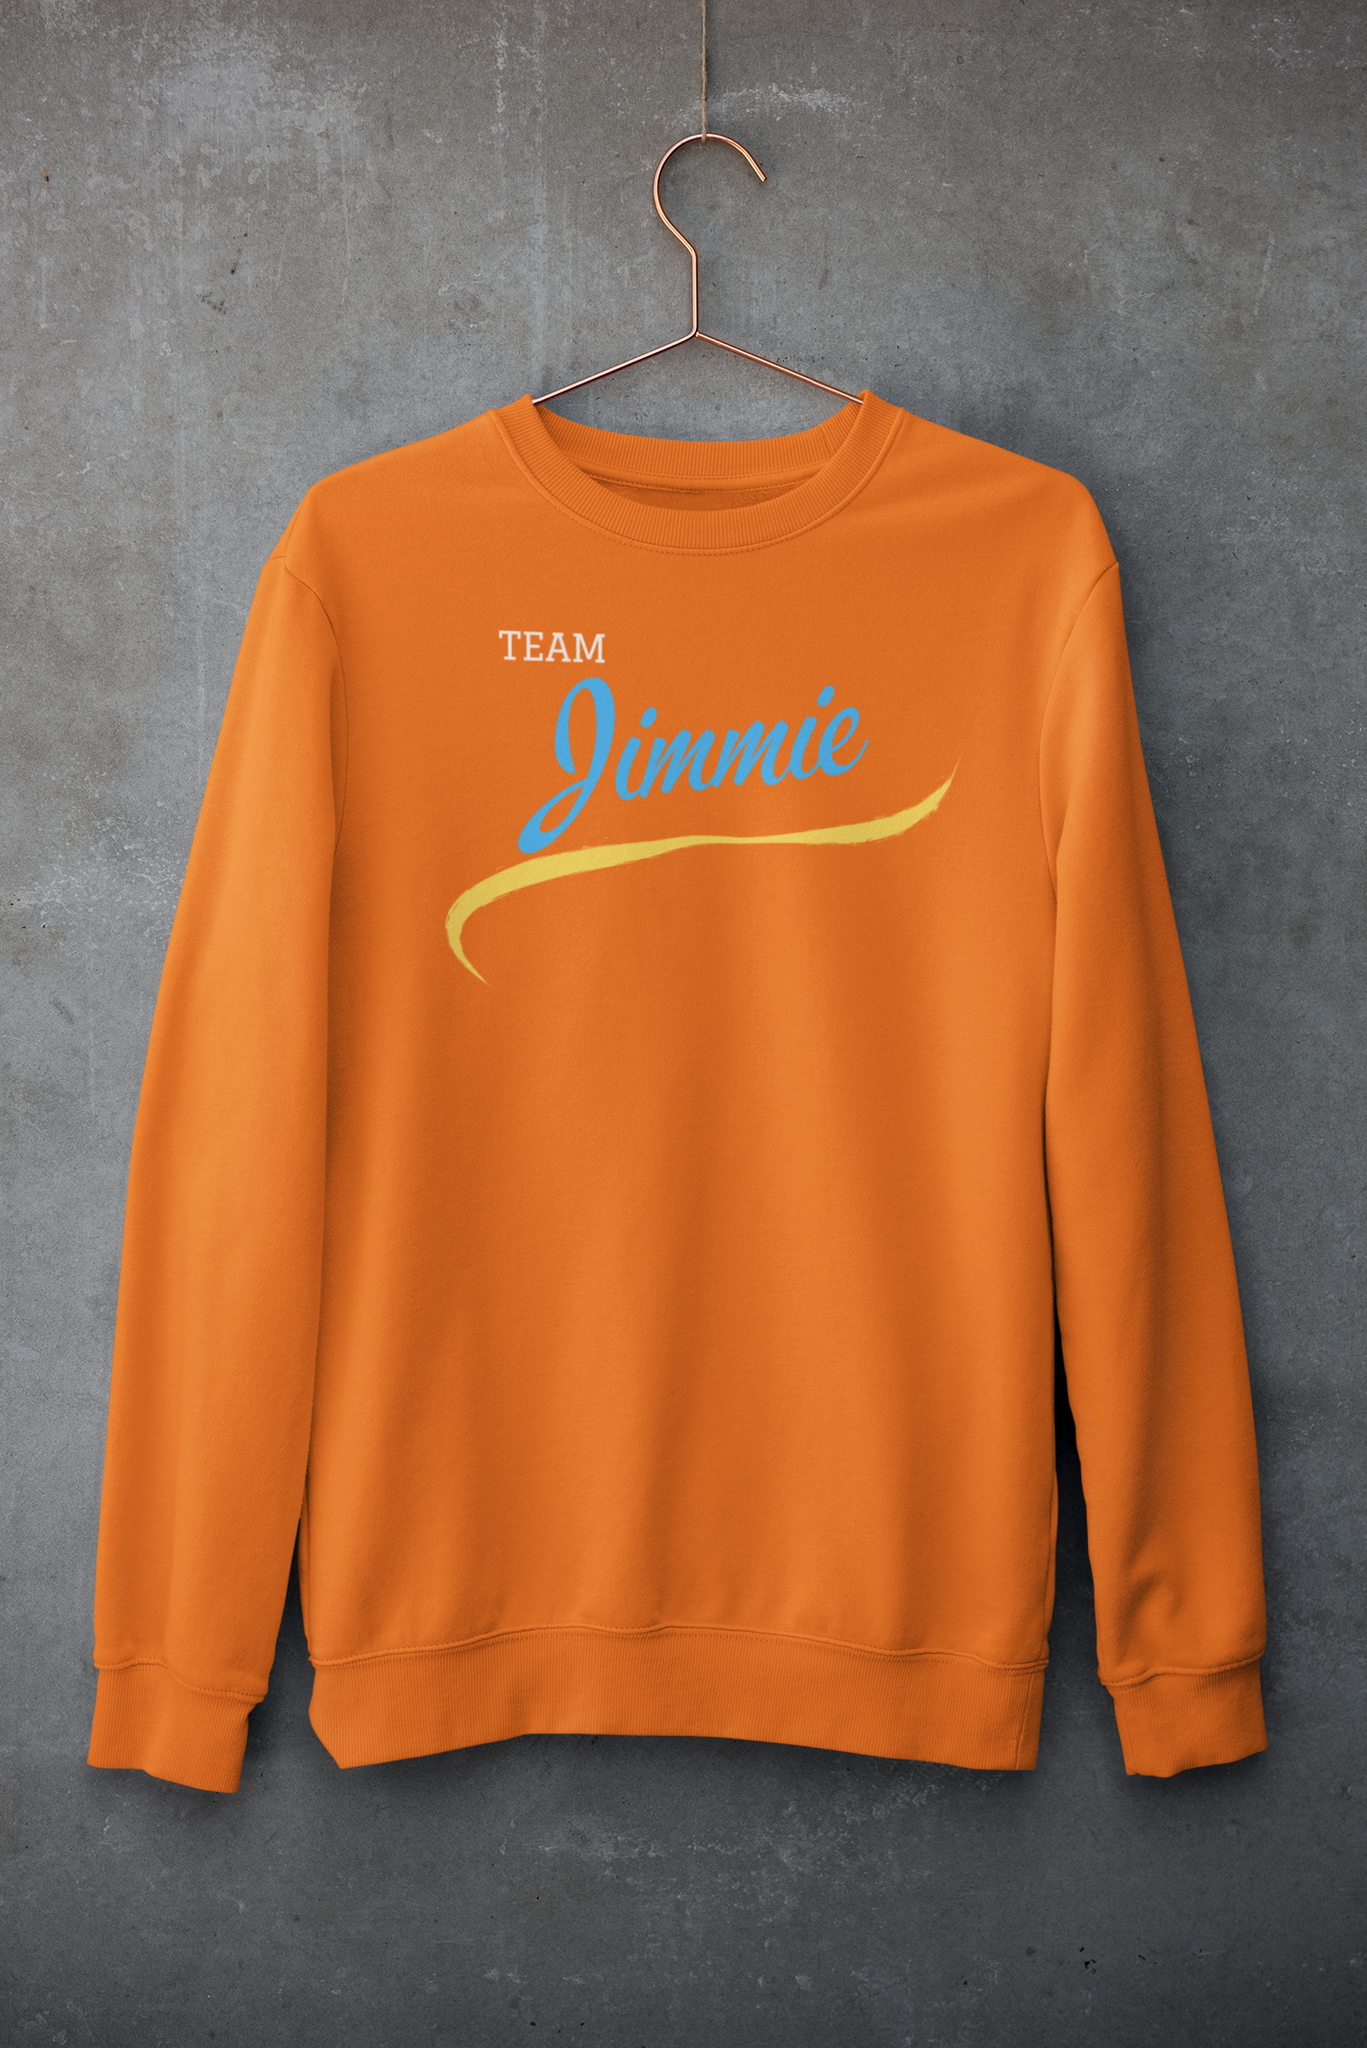 Team Jimmie Sweatshirt Unisex